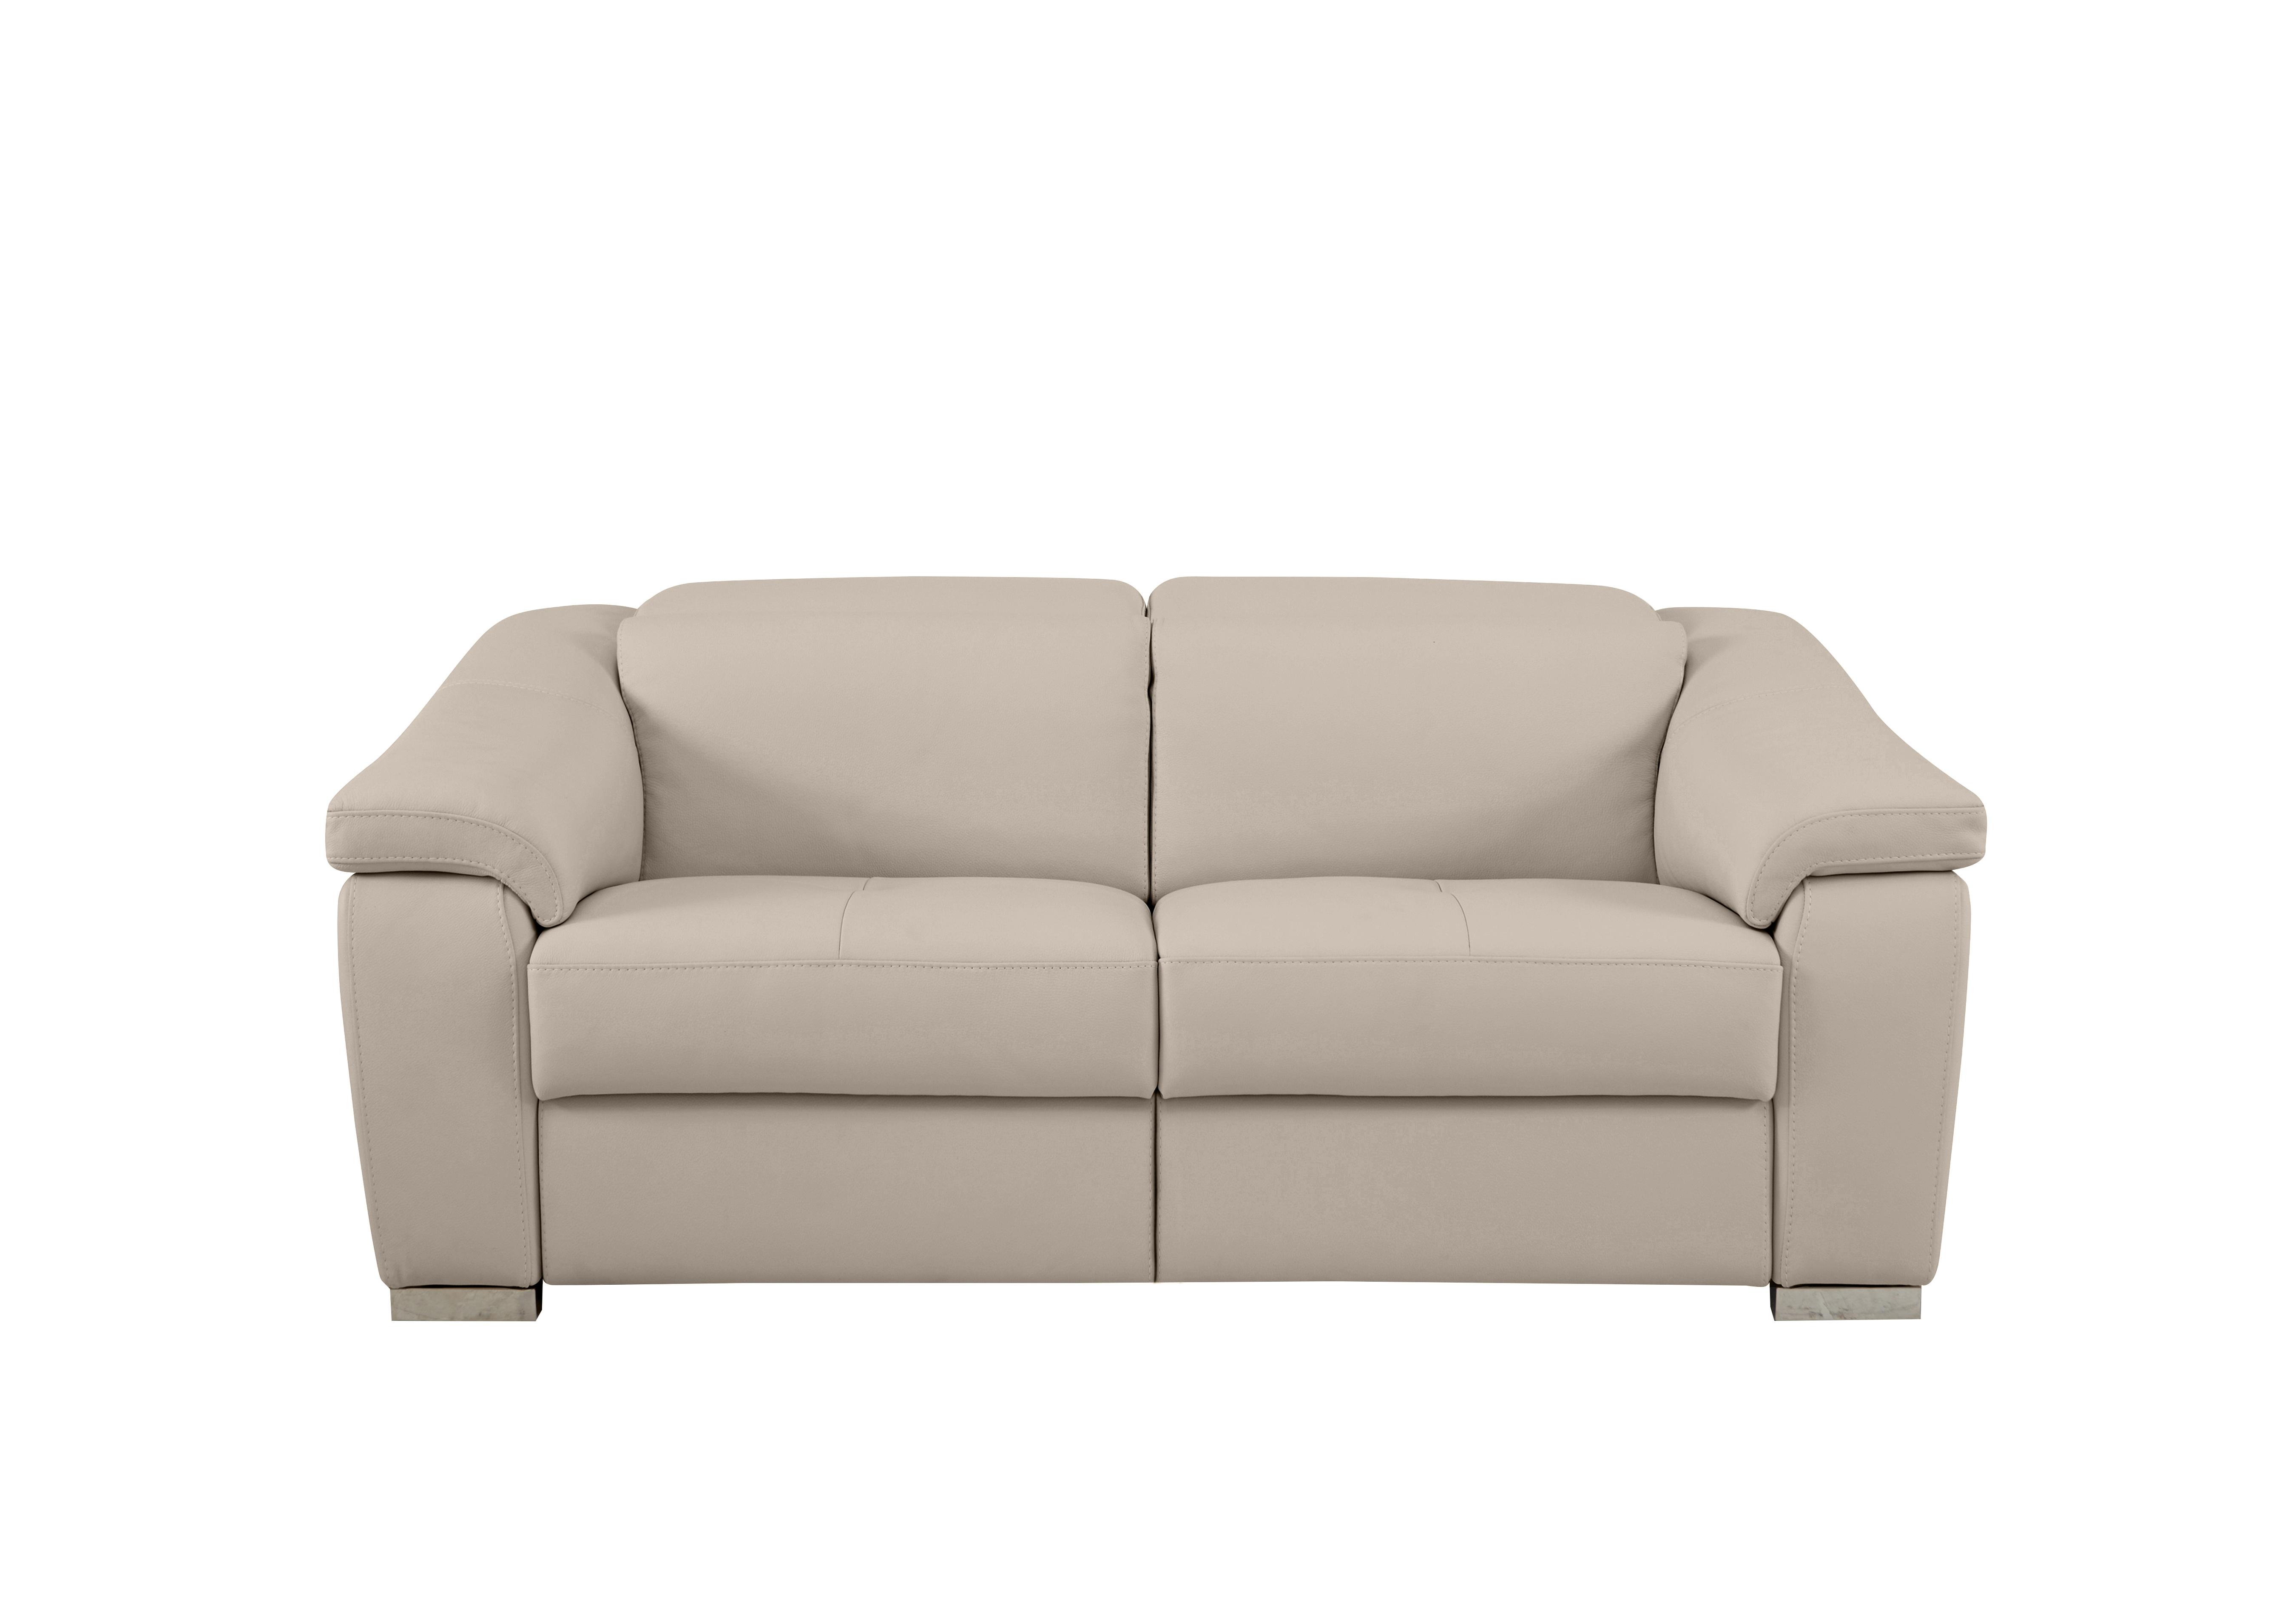 Galileo 2 Seater Leather Sofa in Botero Crema 2156 Ch on Furniture Village